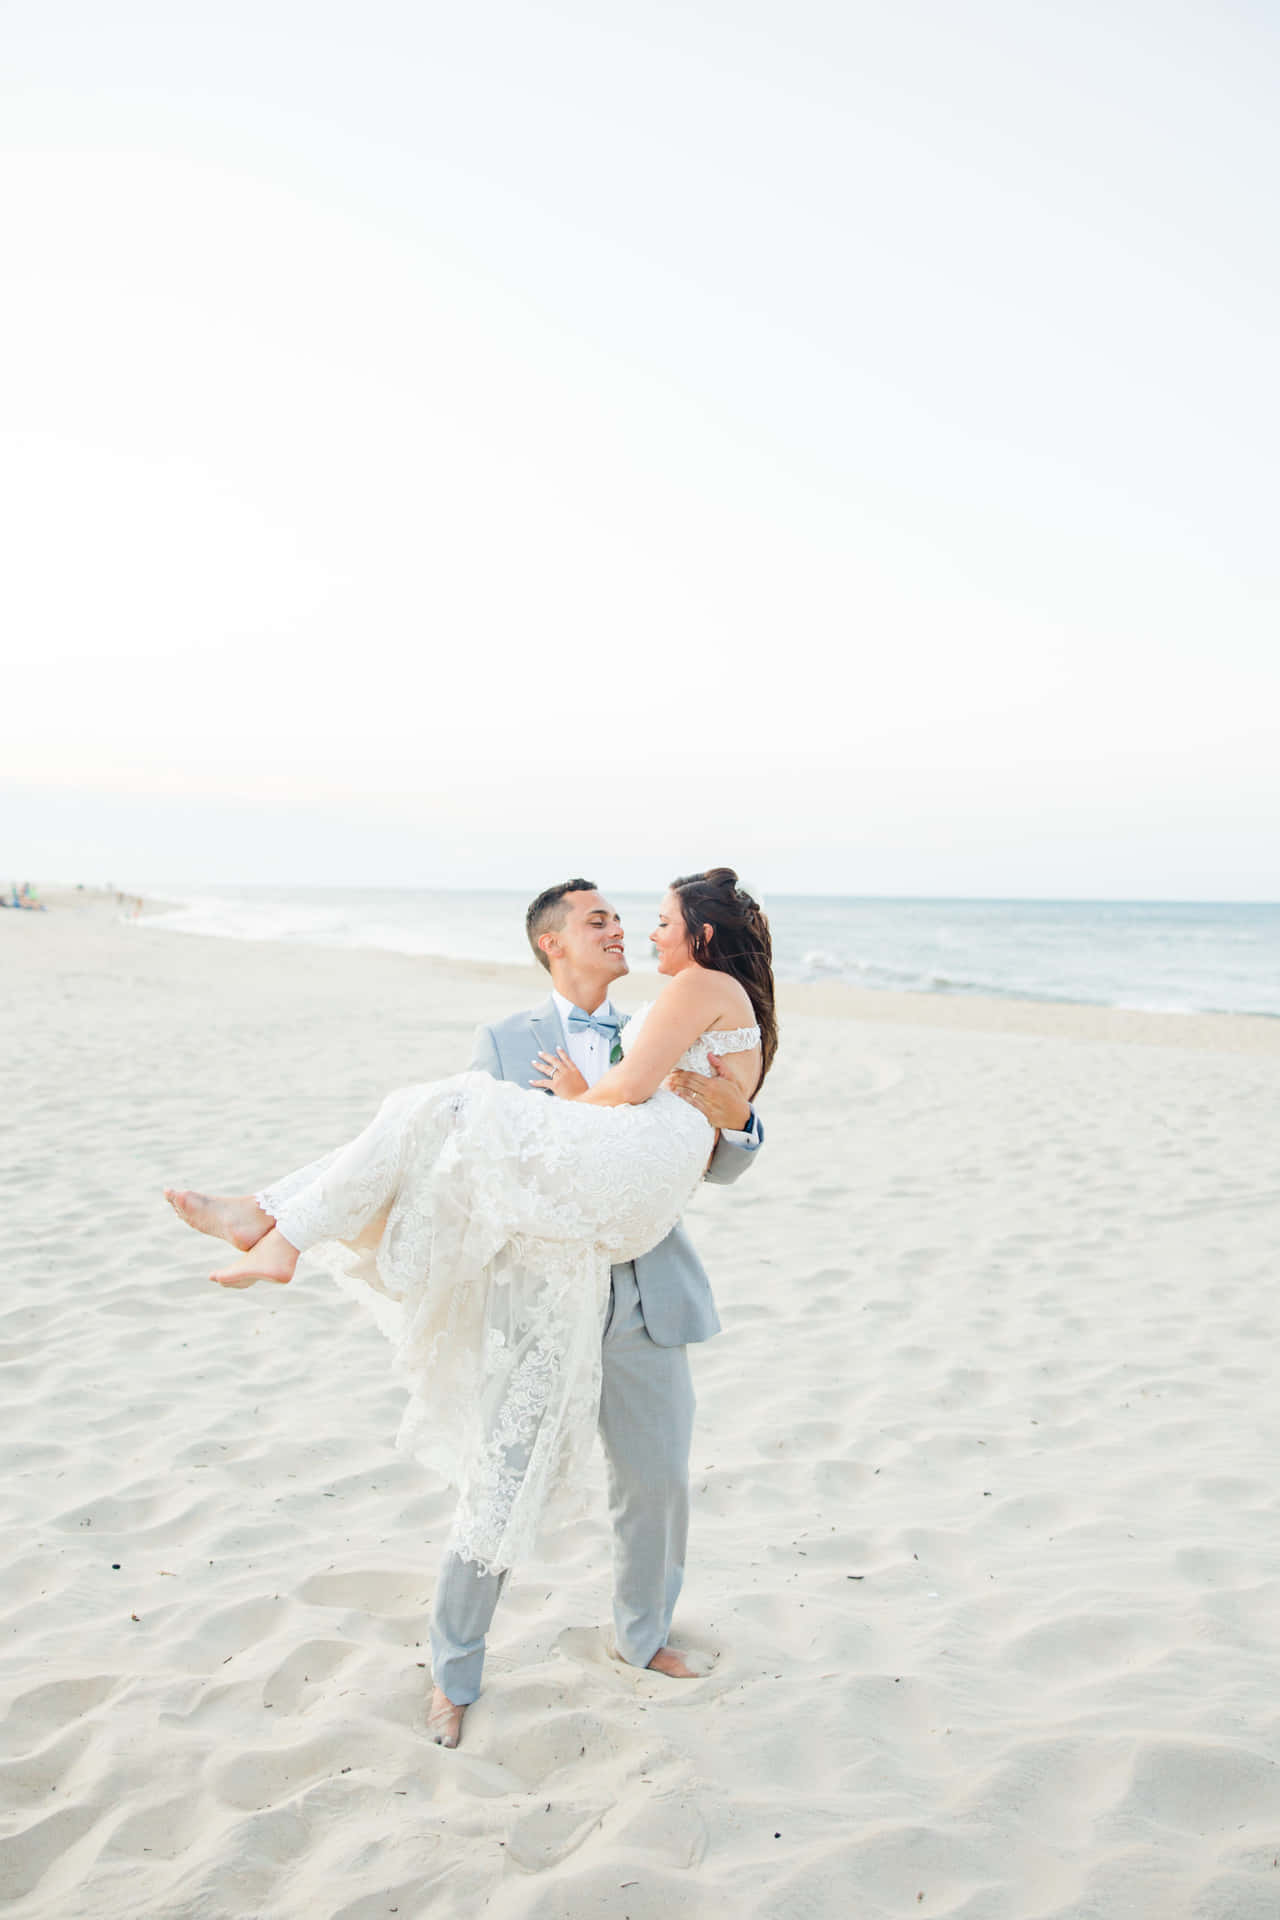 Romantic Beach Wedding Photography Wallpaper